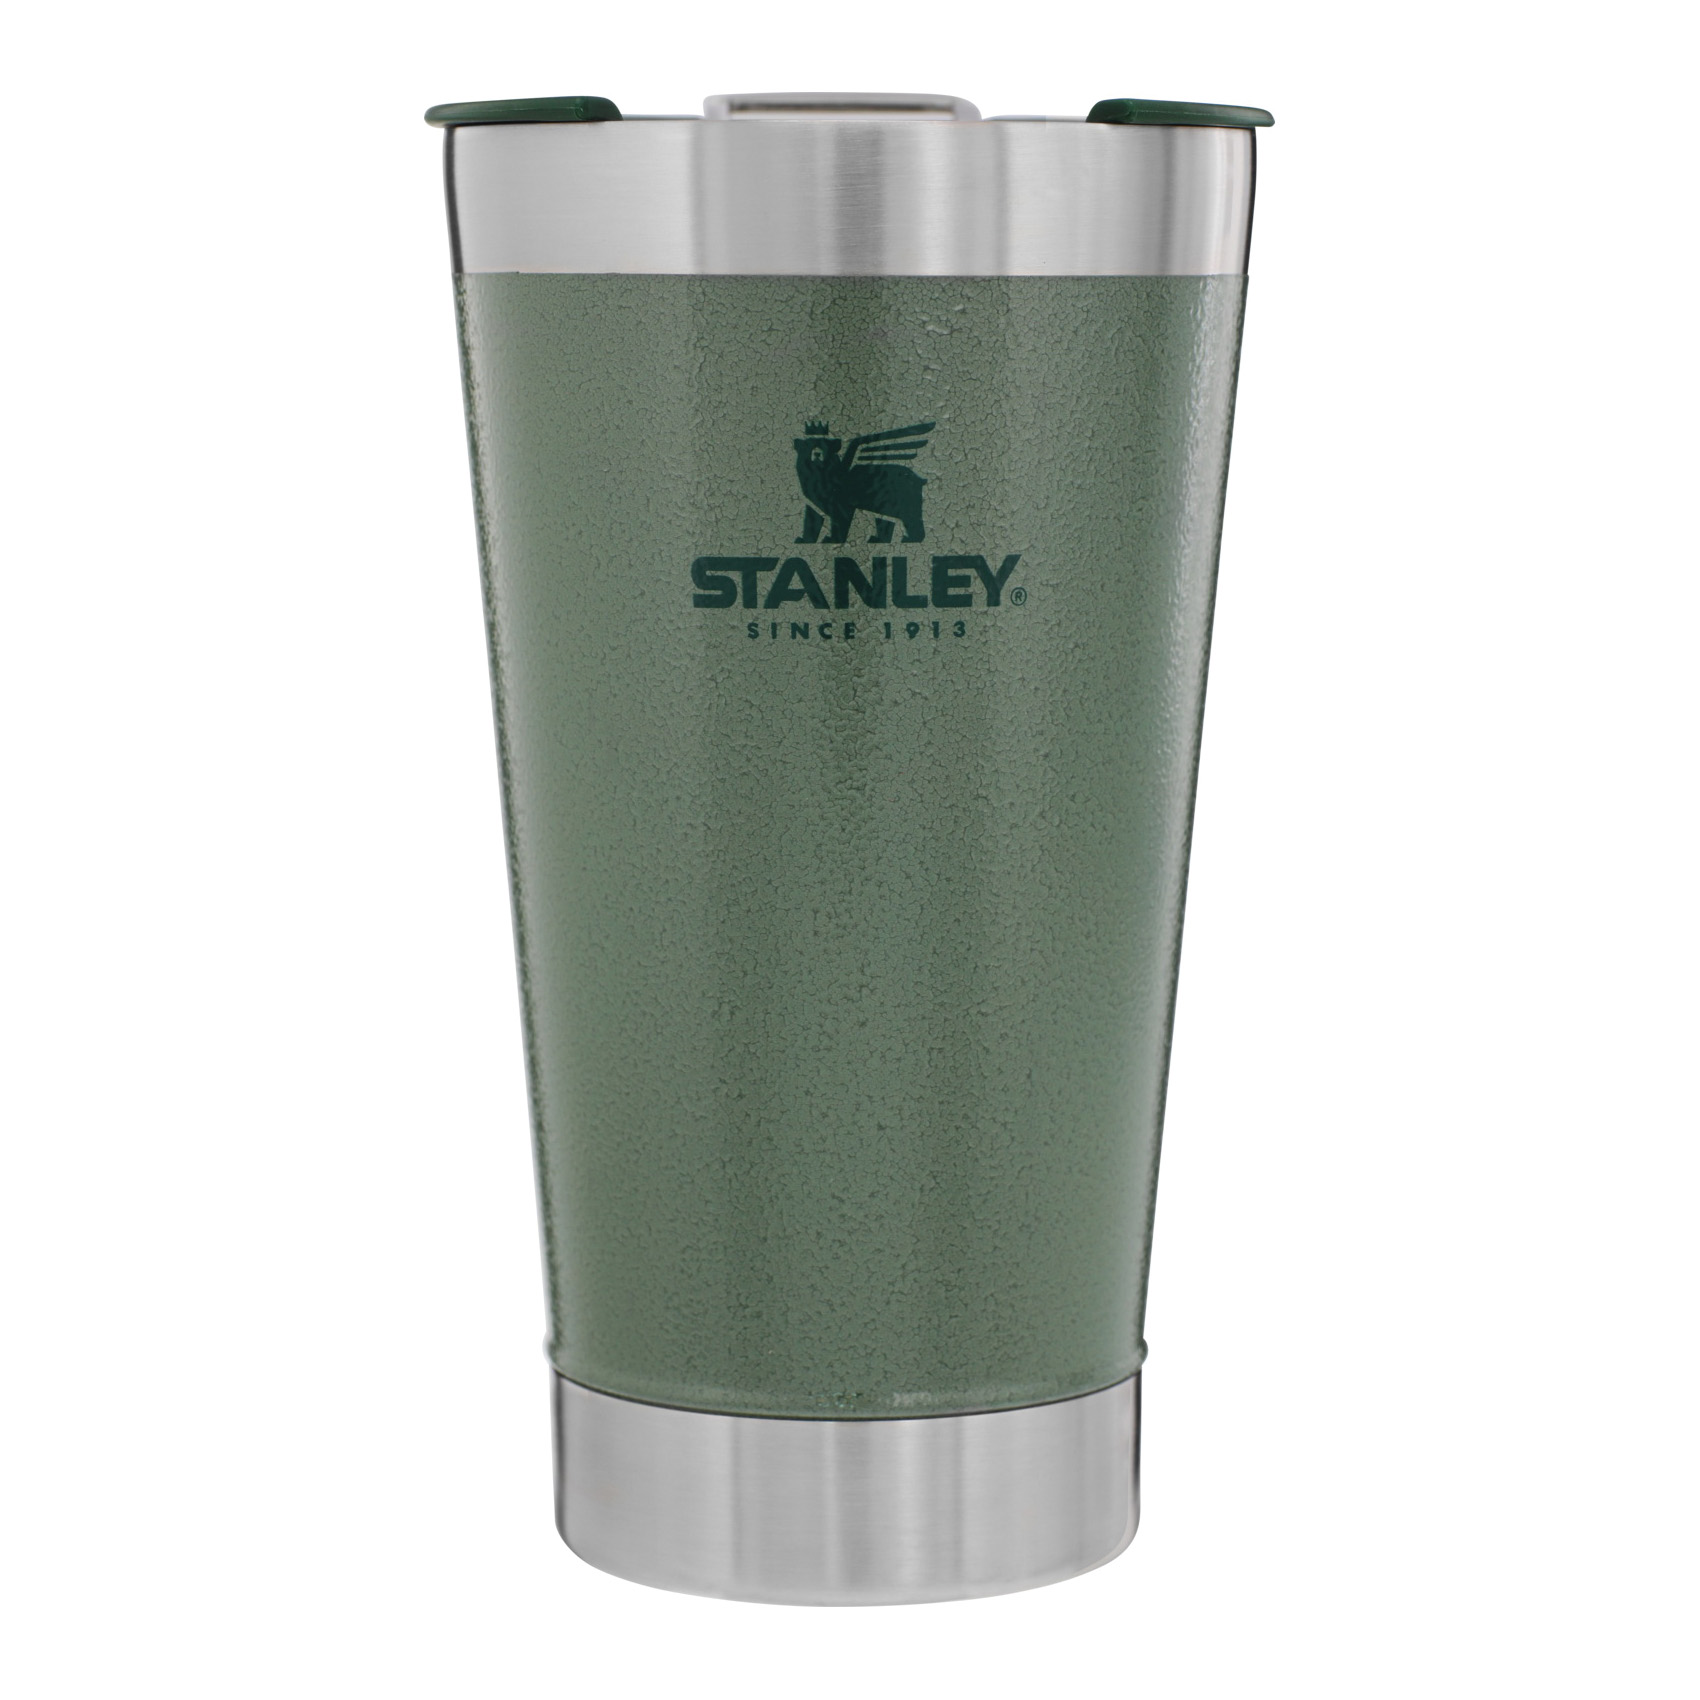 STANLEY Classic 10-01704-055 Bottle, 16 oz Capacity, 18/8 Stainless Steel, Hammertone Green - 2